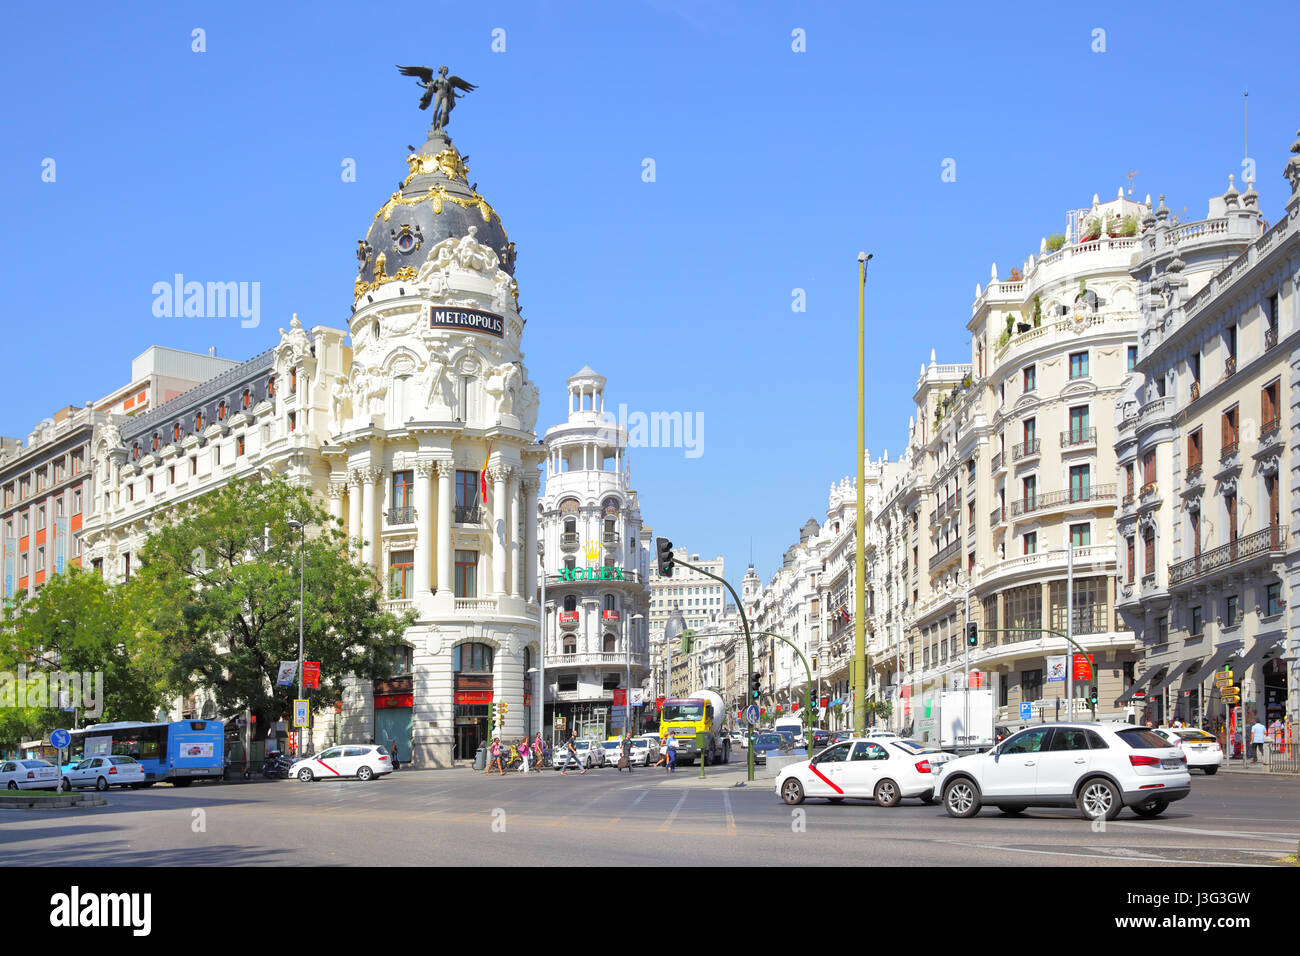 Madrid, Spain - September 01, 2016: The Metropolis building on the corner of Calle de Alcala and Gran Via street in Madrid Stock Photo